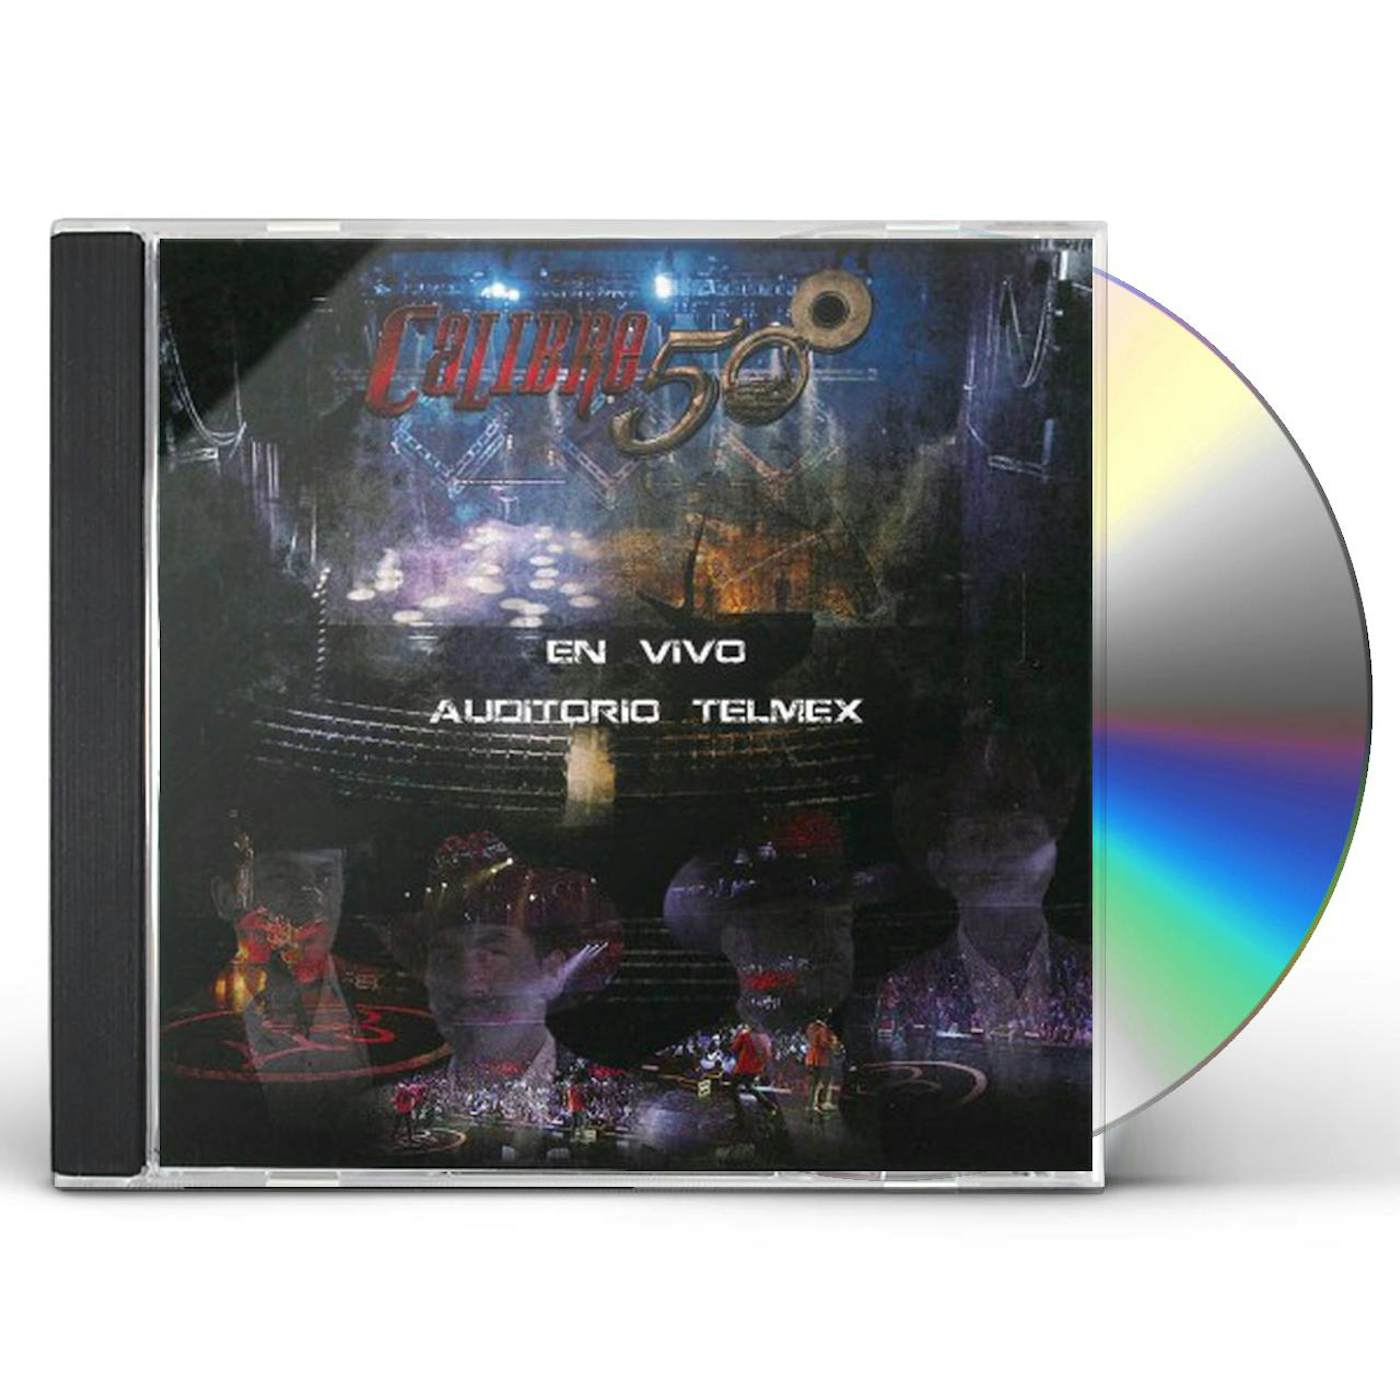 Calibre 50 EN VIVO AUDITORIO TELMEX CD